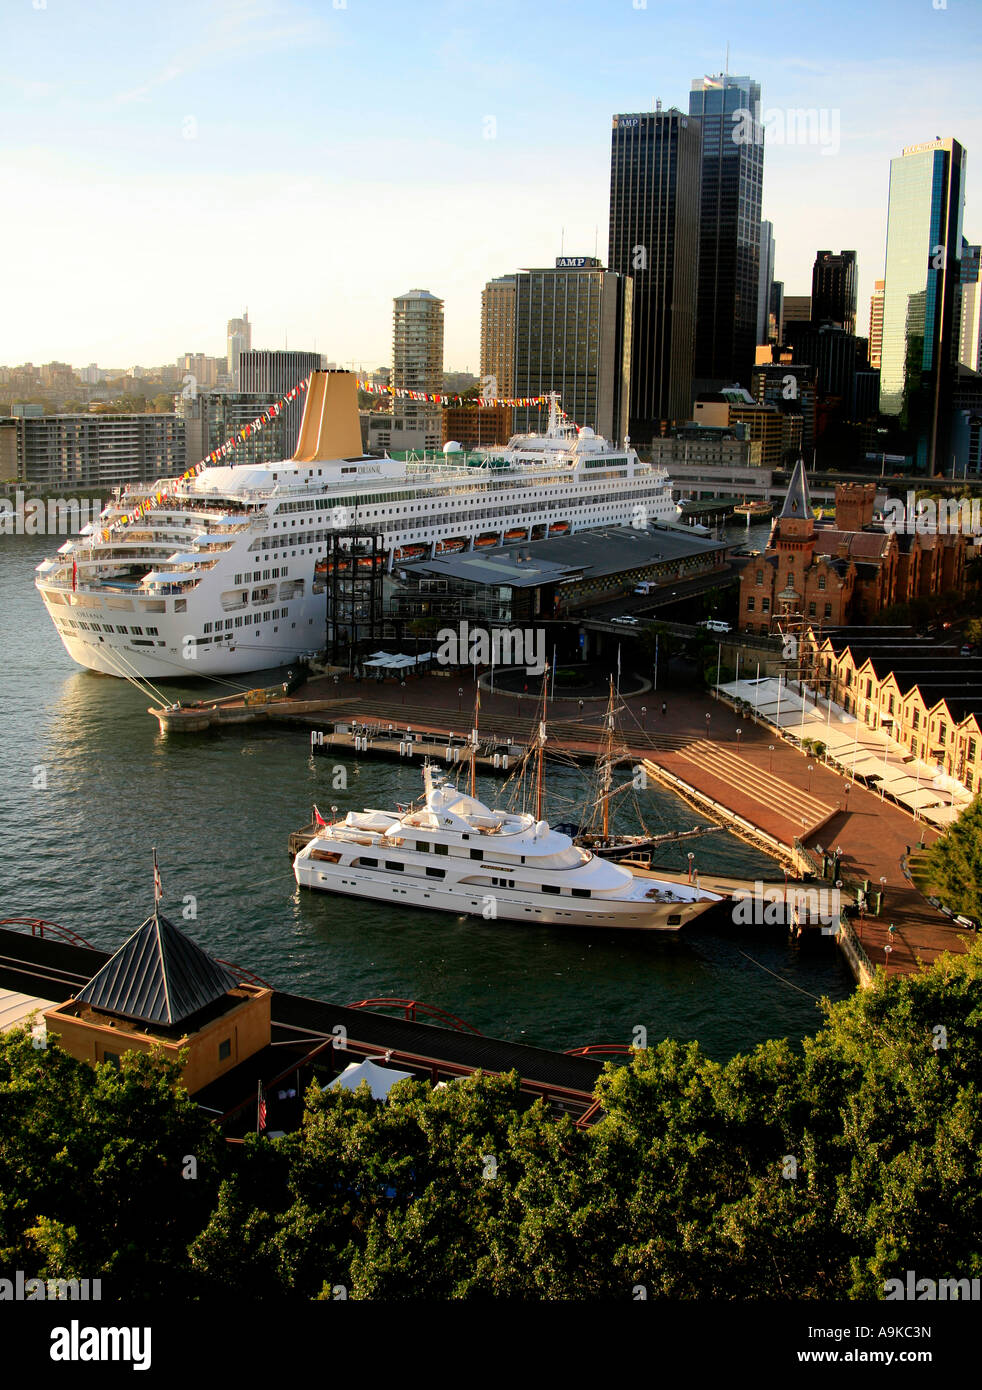 Circular Quay Sydney Australia with the P&O Cruise ship Oriana docked at the passenger terminal Stock Photo